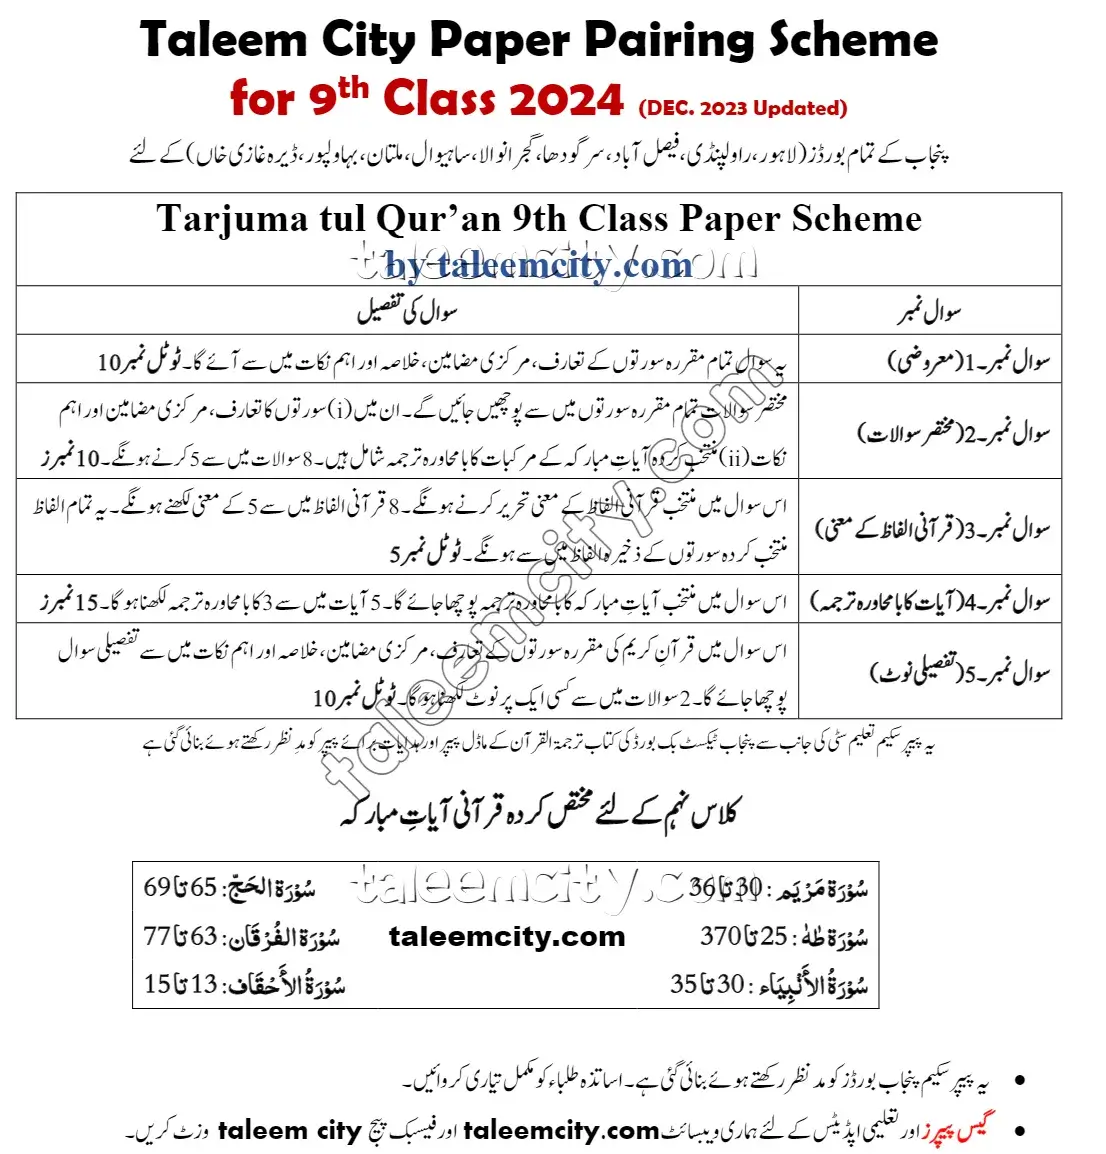 9th Class Tarjuma Tul Quran Pairing Scheme 2024.webp